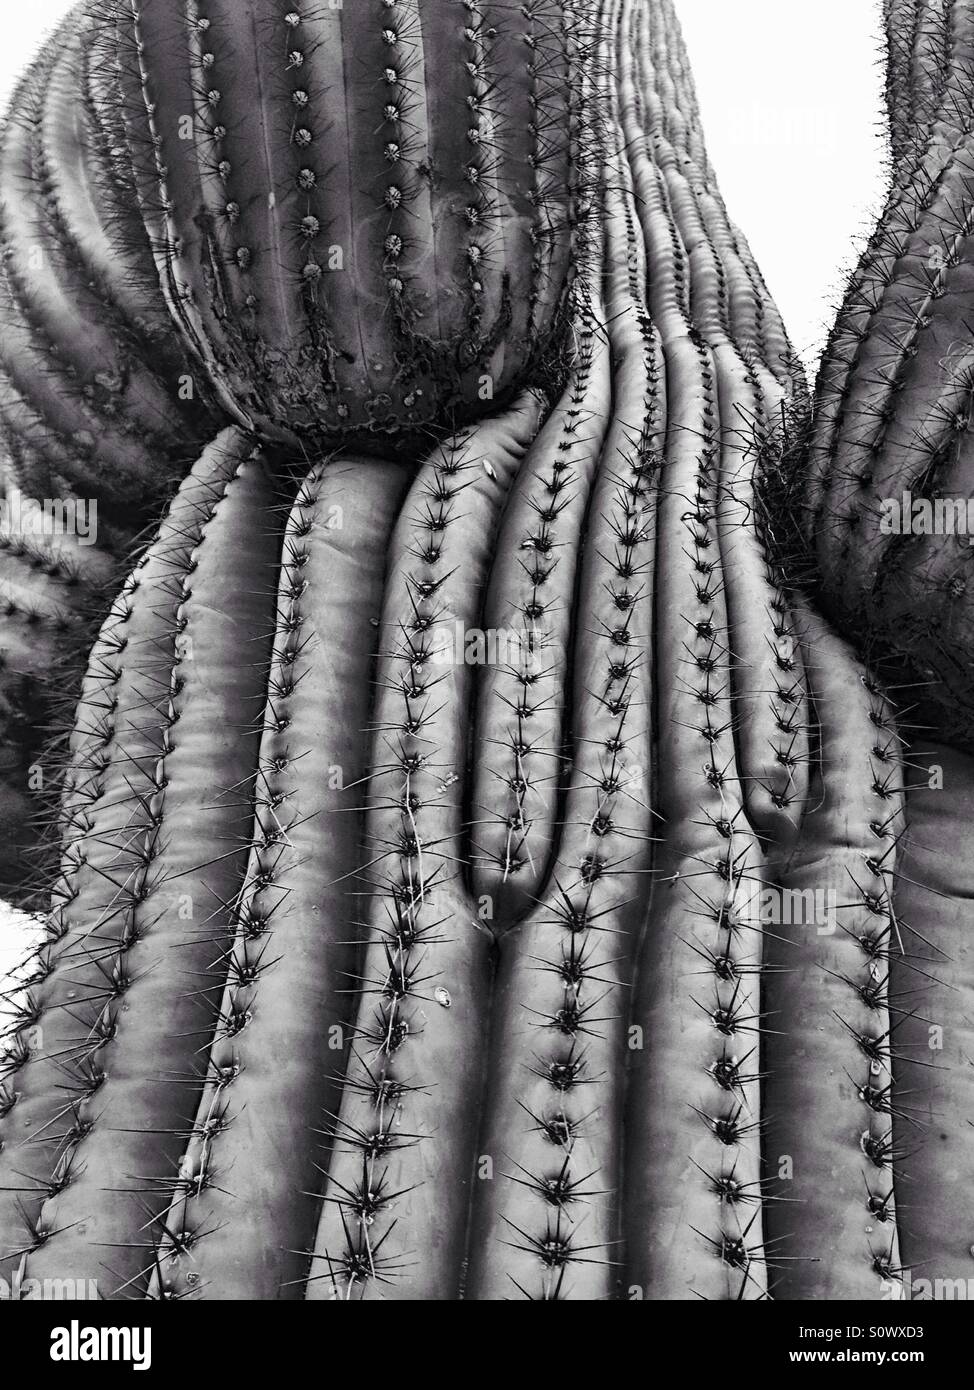 Saguaro cactus in black and white Stock Photo